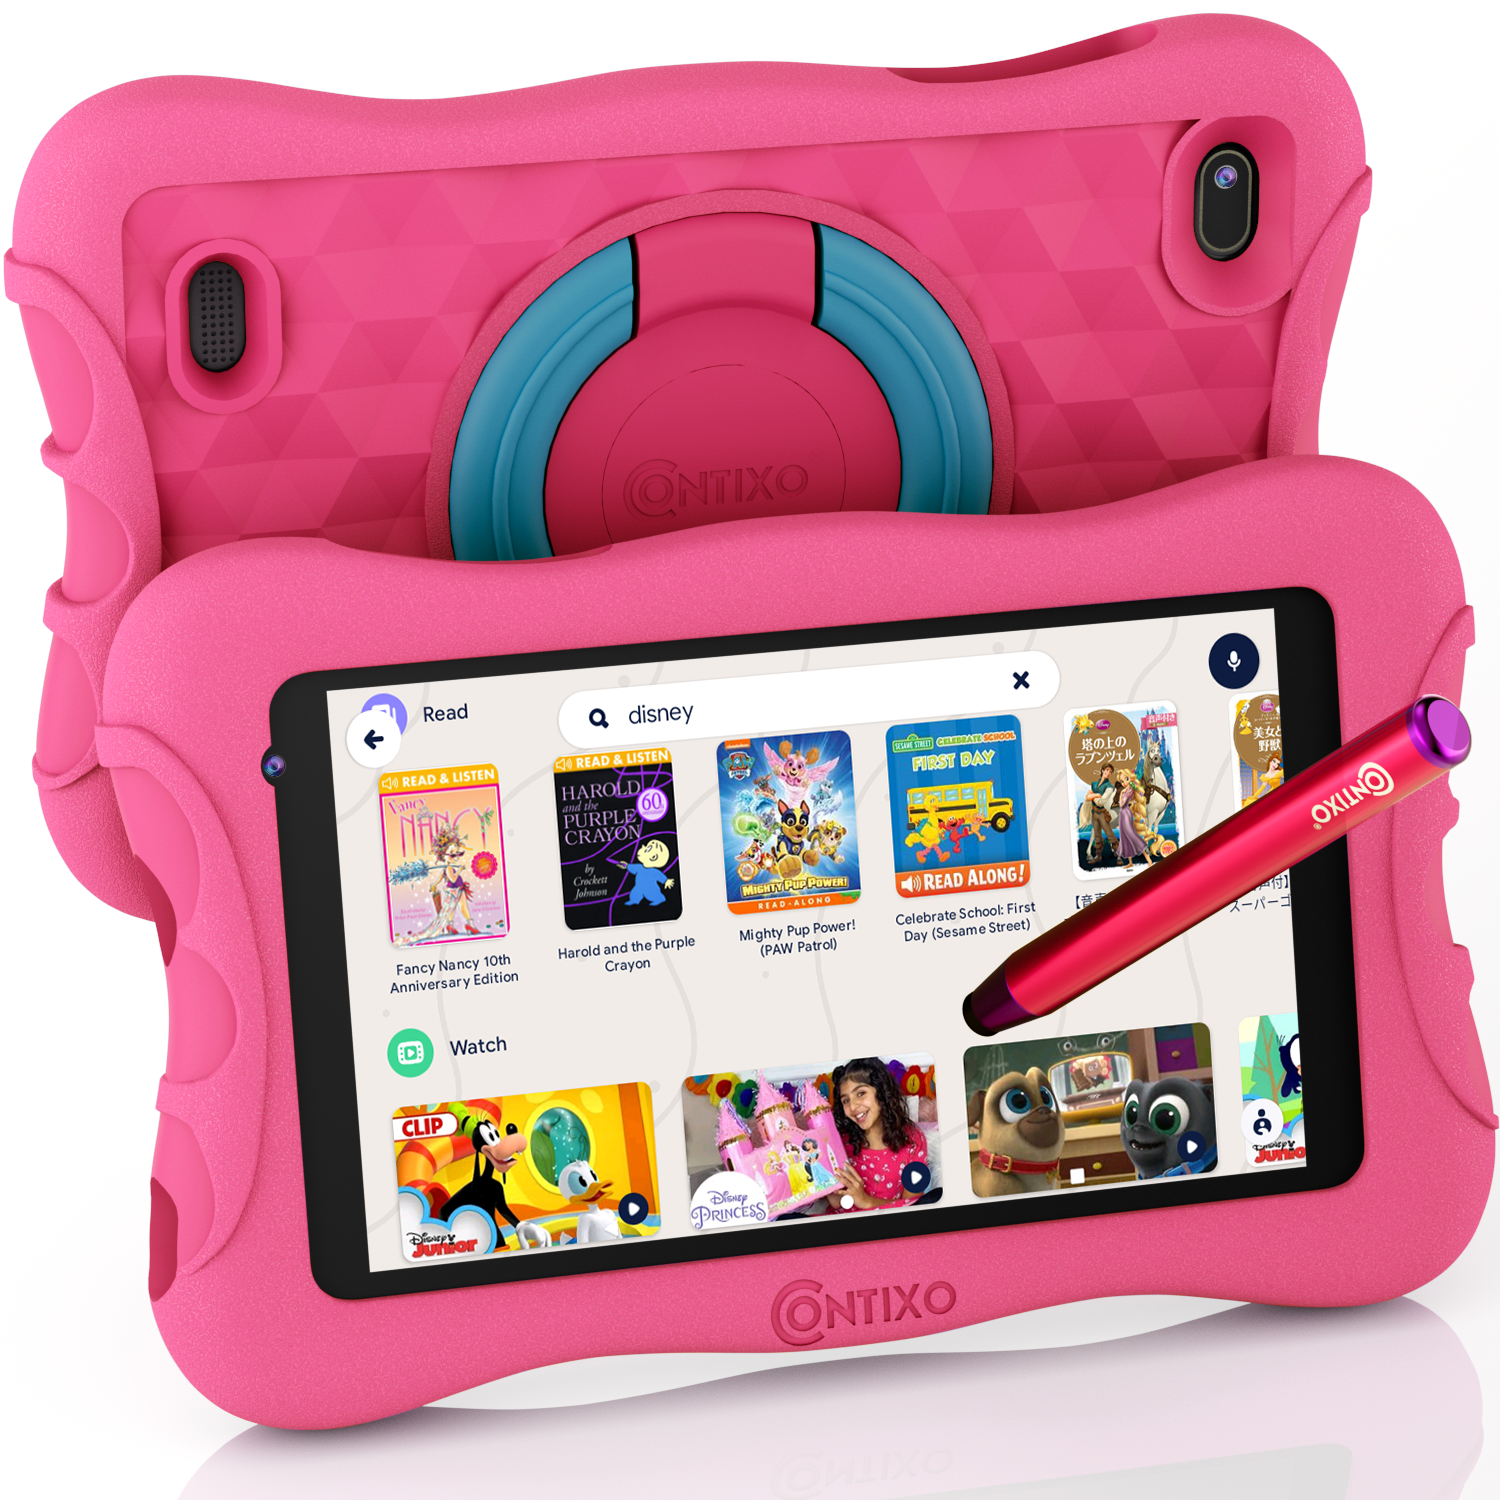 Contixo V10+ 7-Inch Kids 32GB Tablets